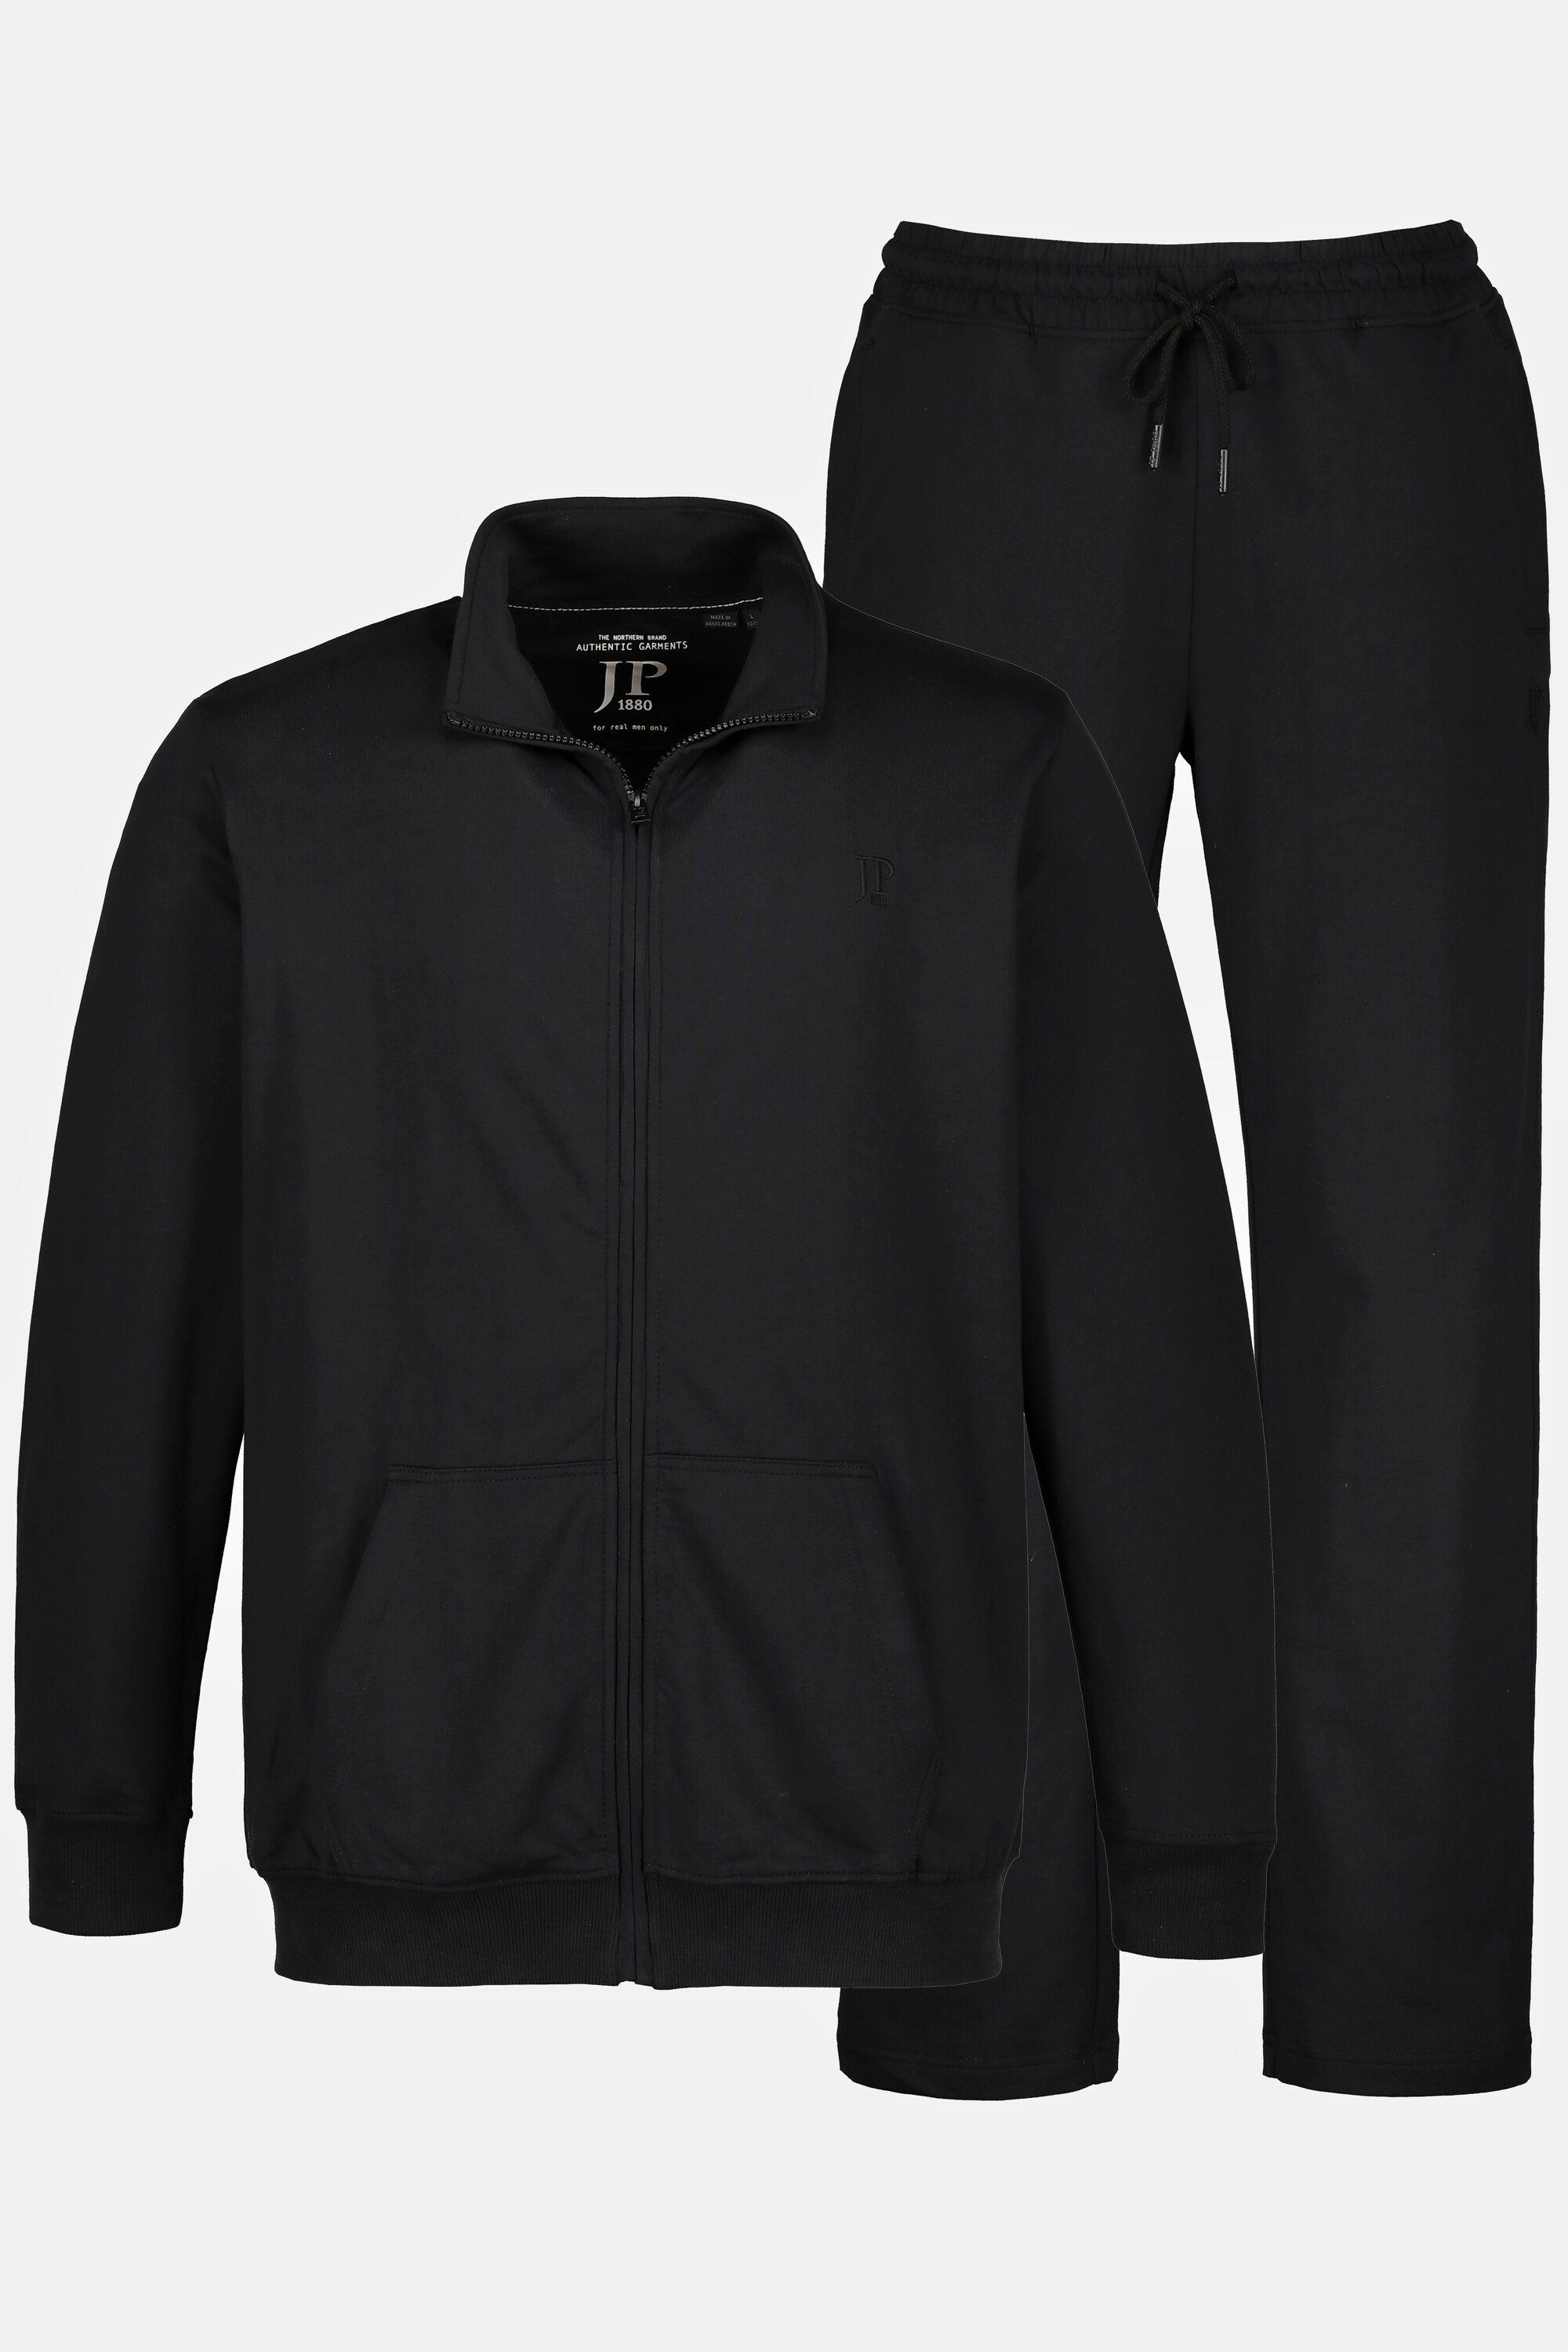 Jogginganzug schwarz Homewear 2-teilig JP1880 Jacke Hose Fleecejacke und